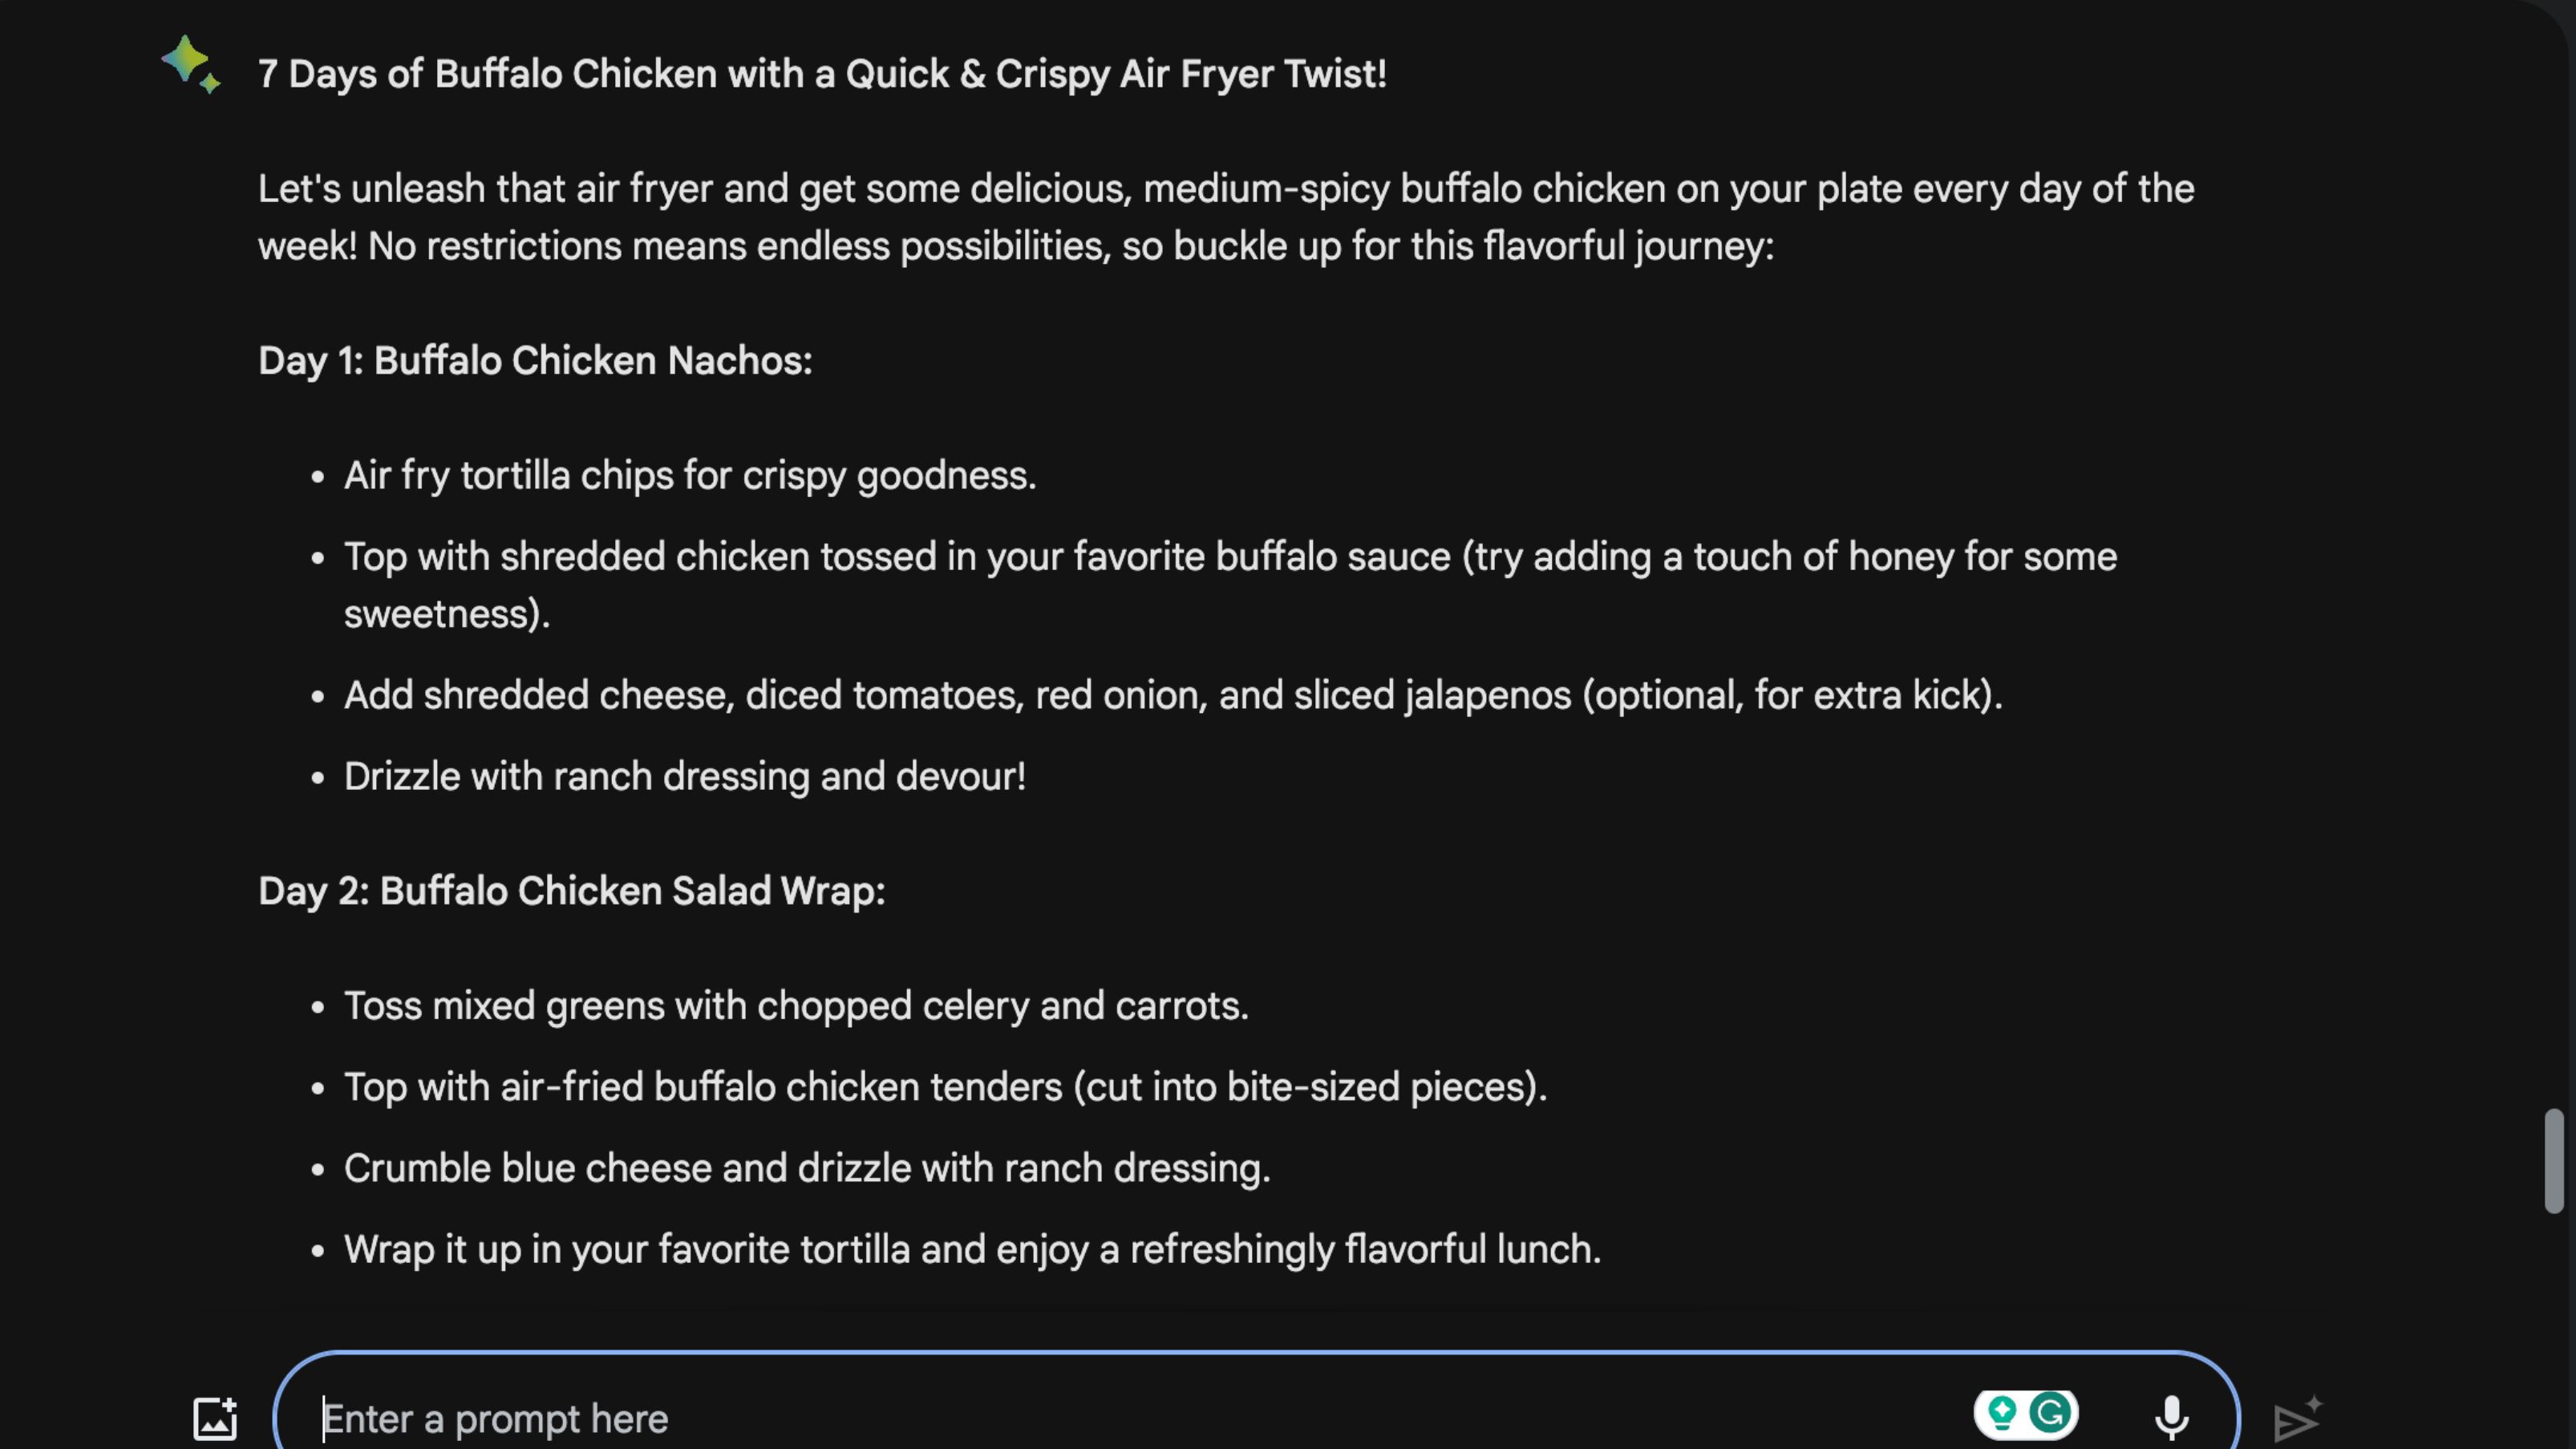 Google Bard's Buffalo Chicken Meal Plan